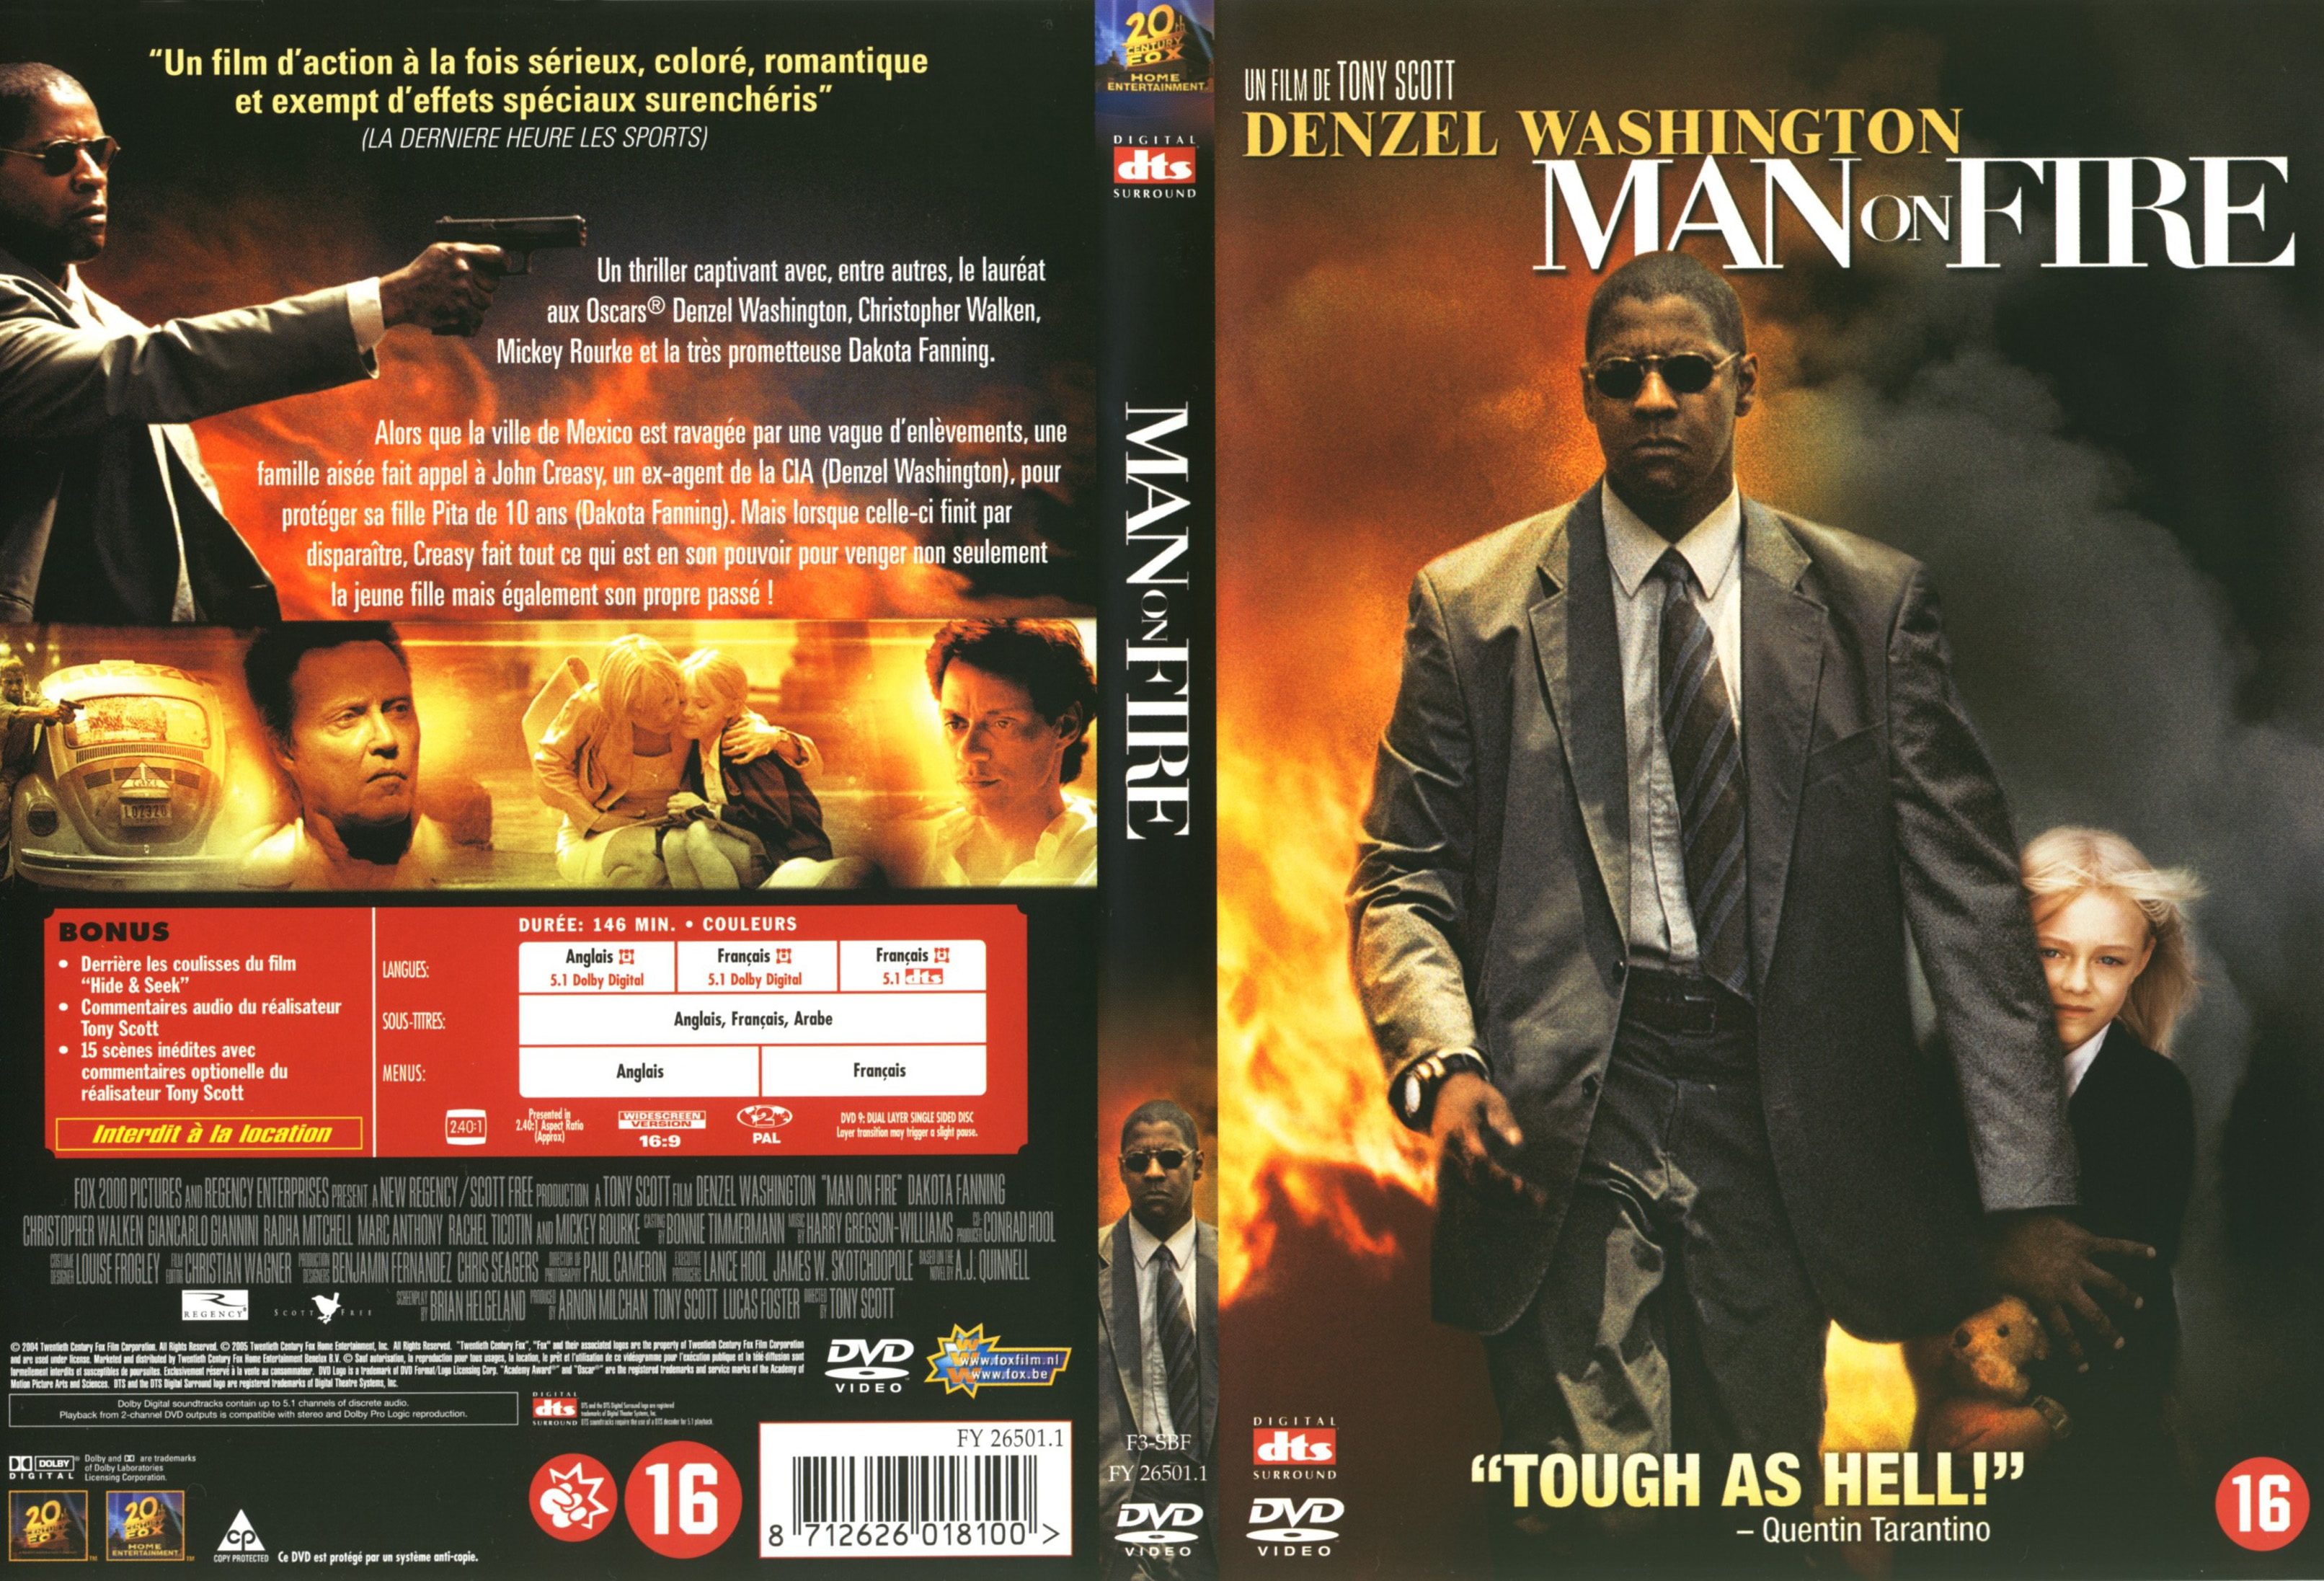 Jaquette DVD Man on fire v2